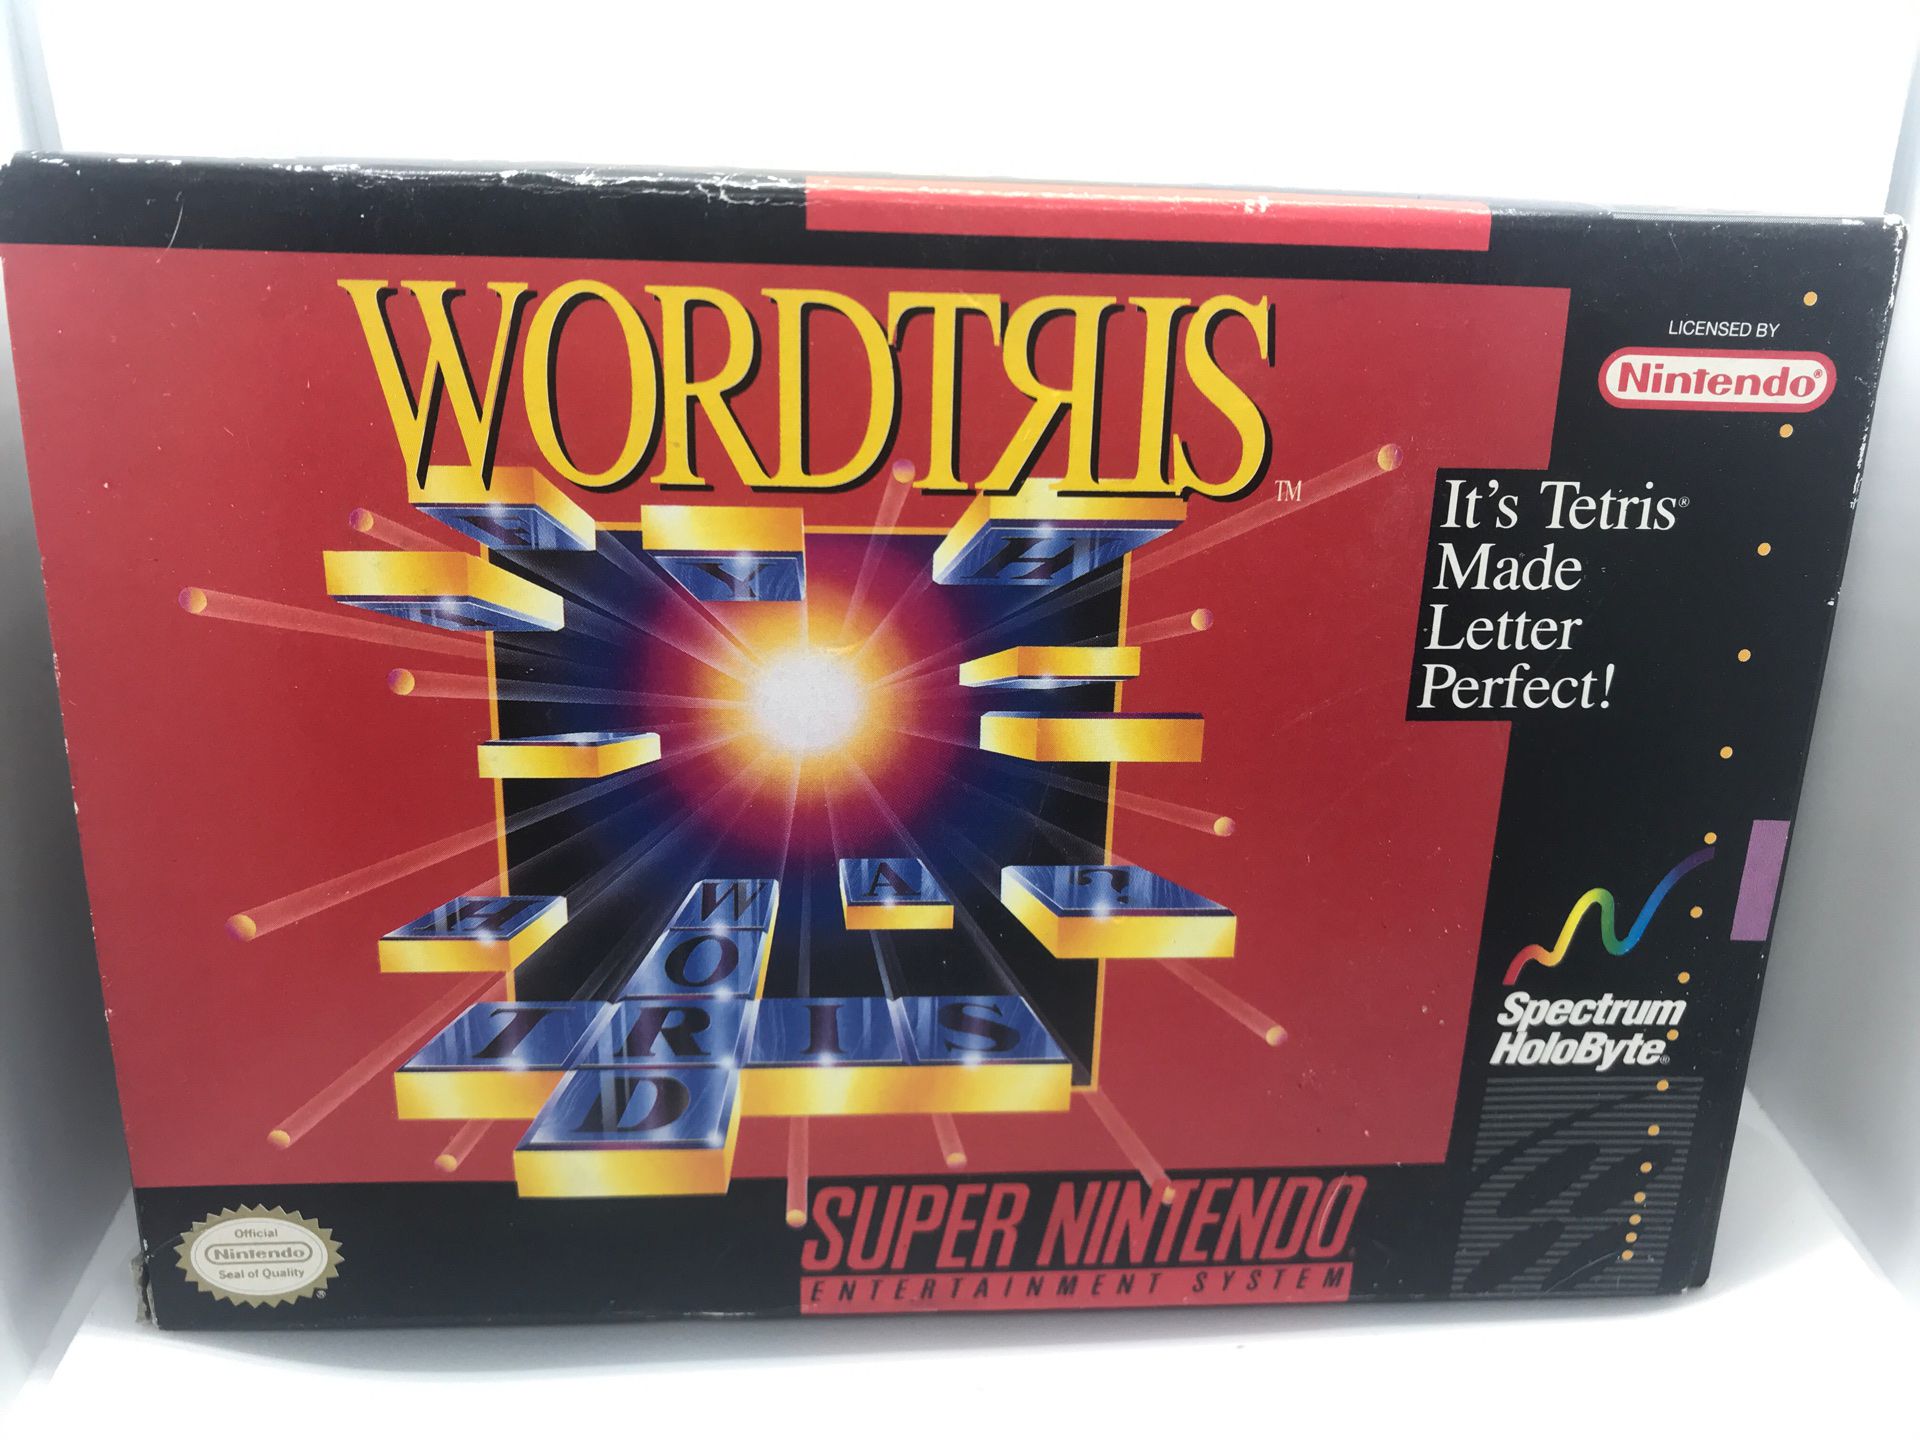 Wordtris Super Nintendo cib